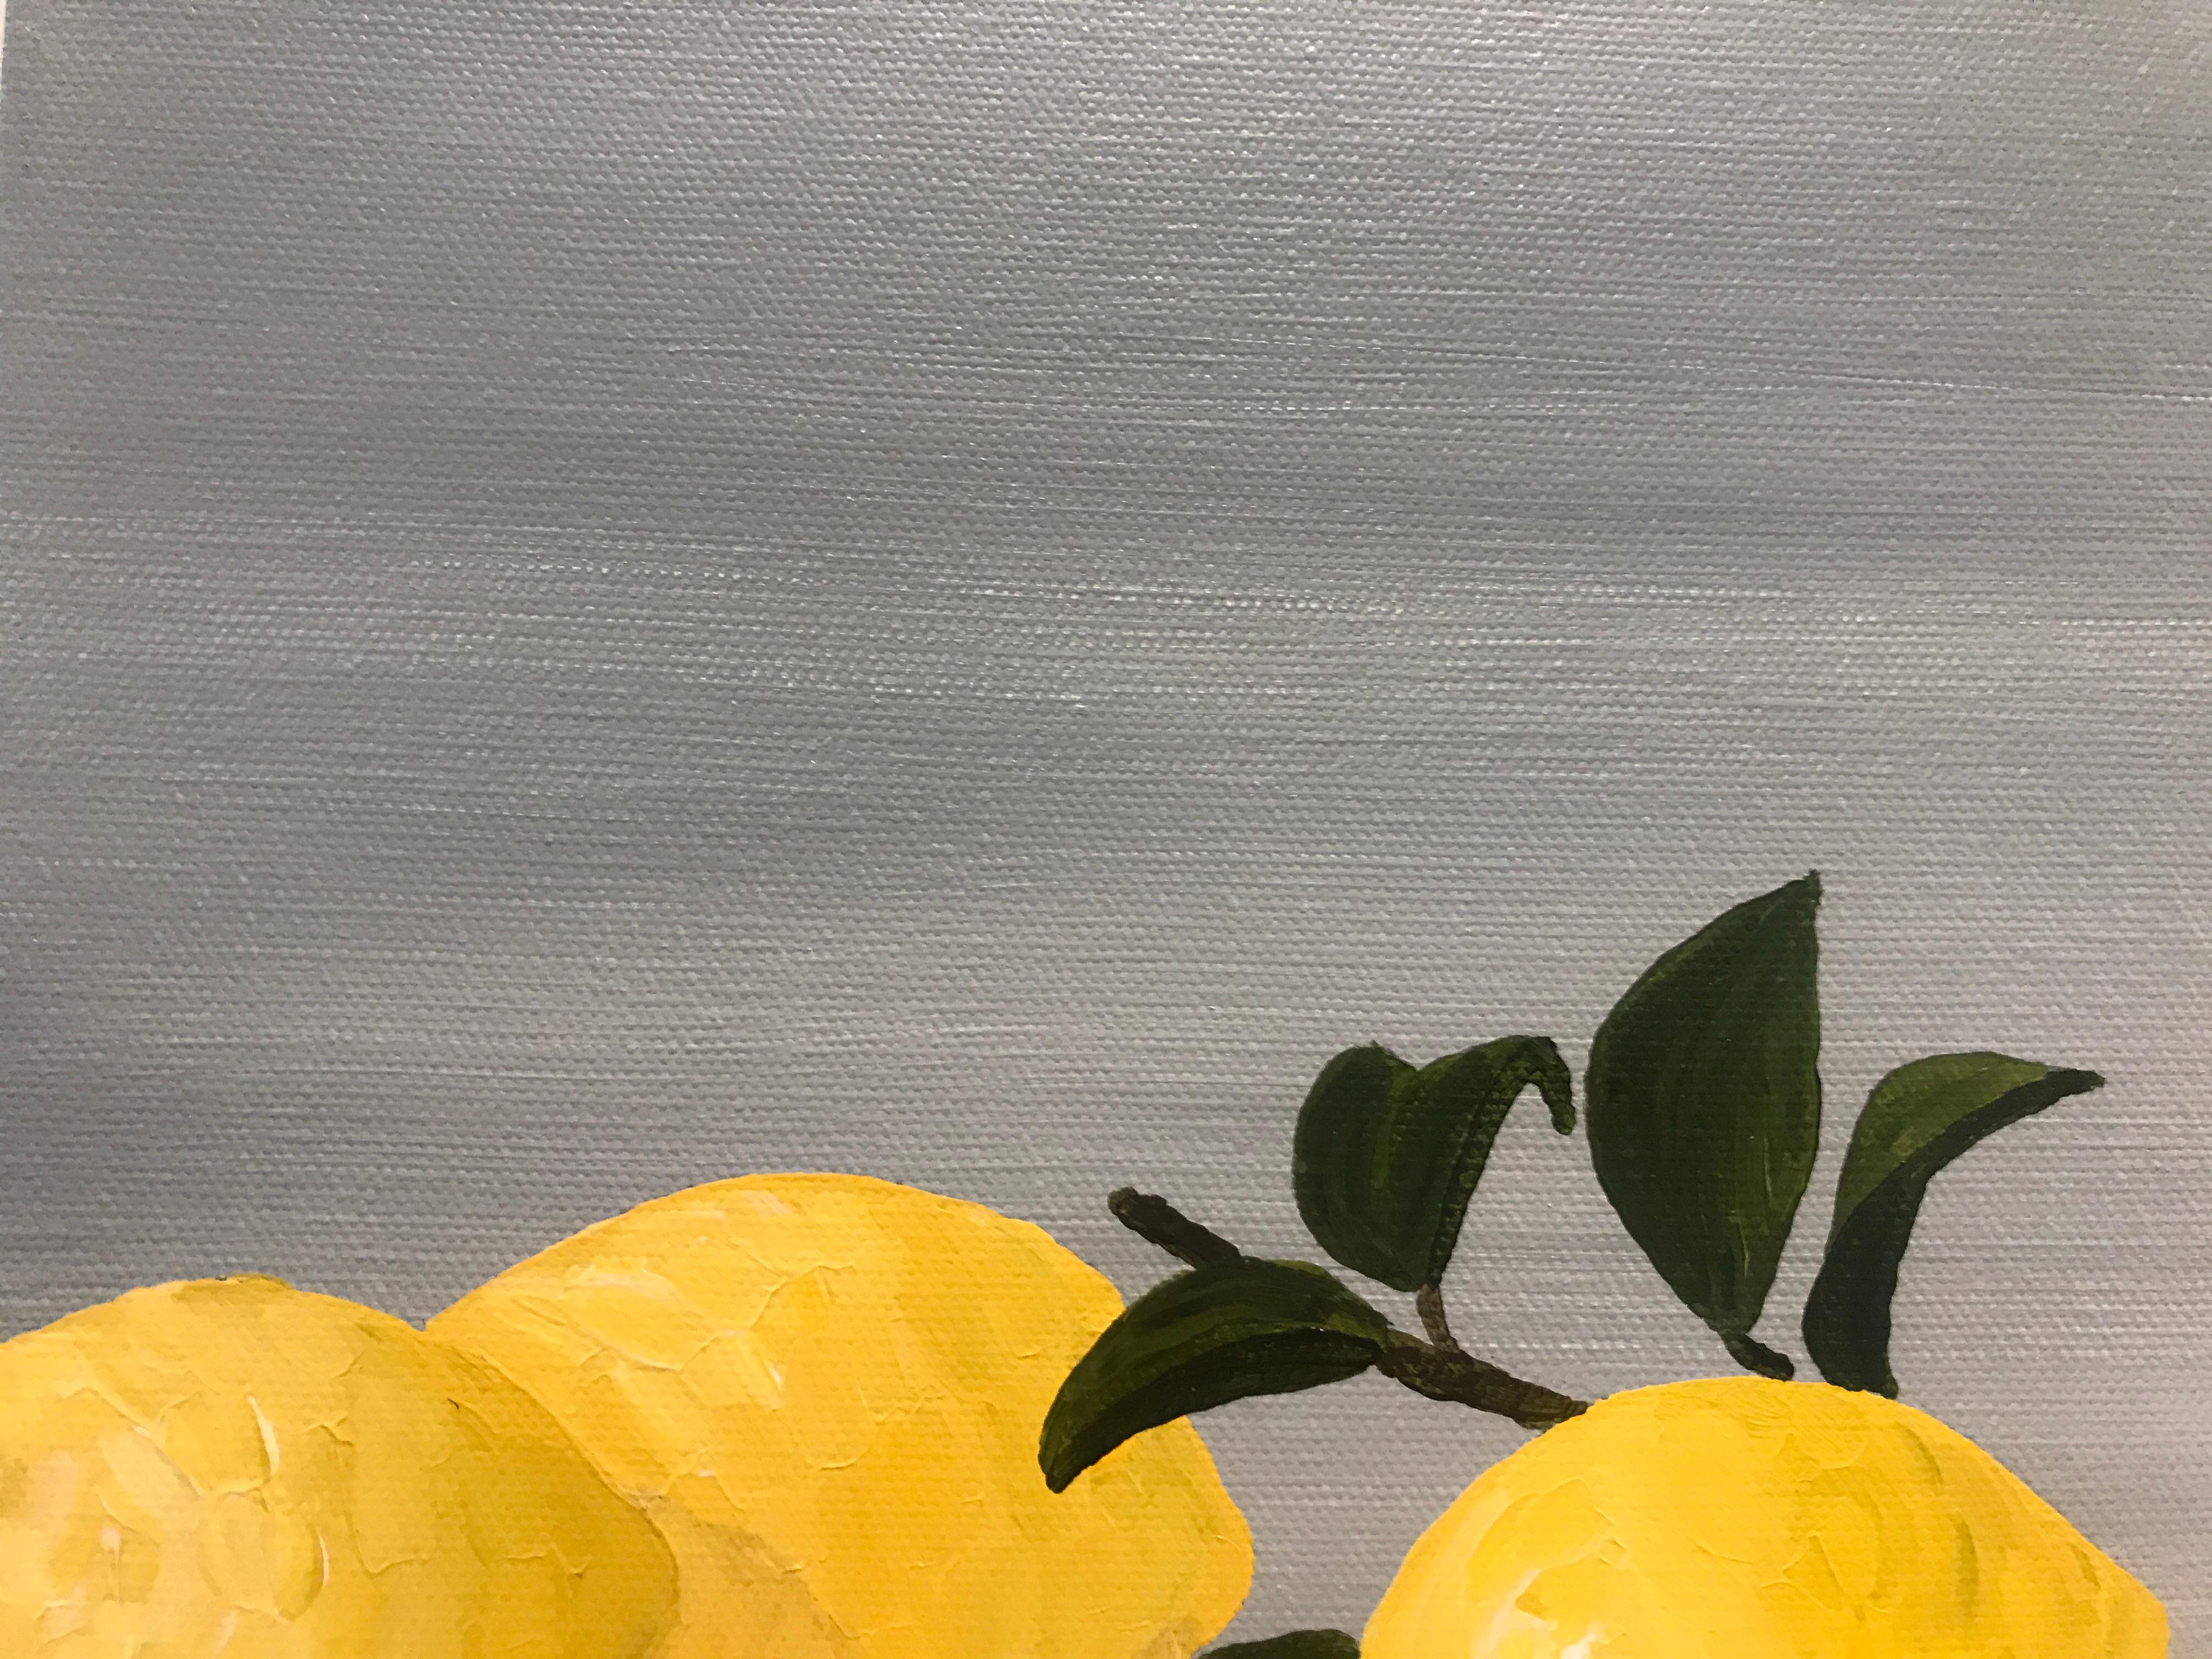 Lemons I by Susan Kinsella, Small Contemporary Still-Life Square Format Painting 5